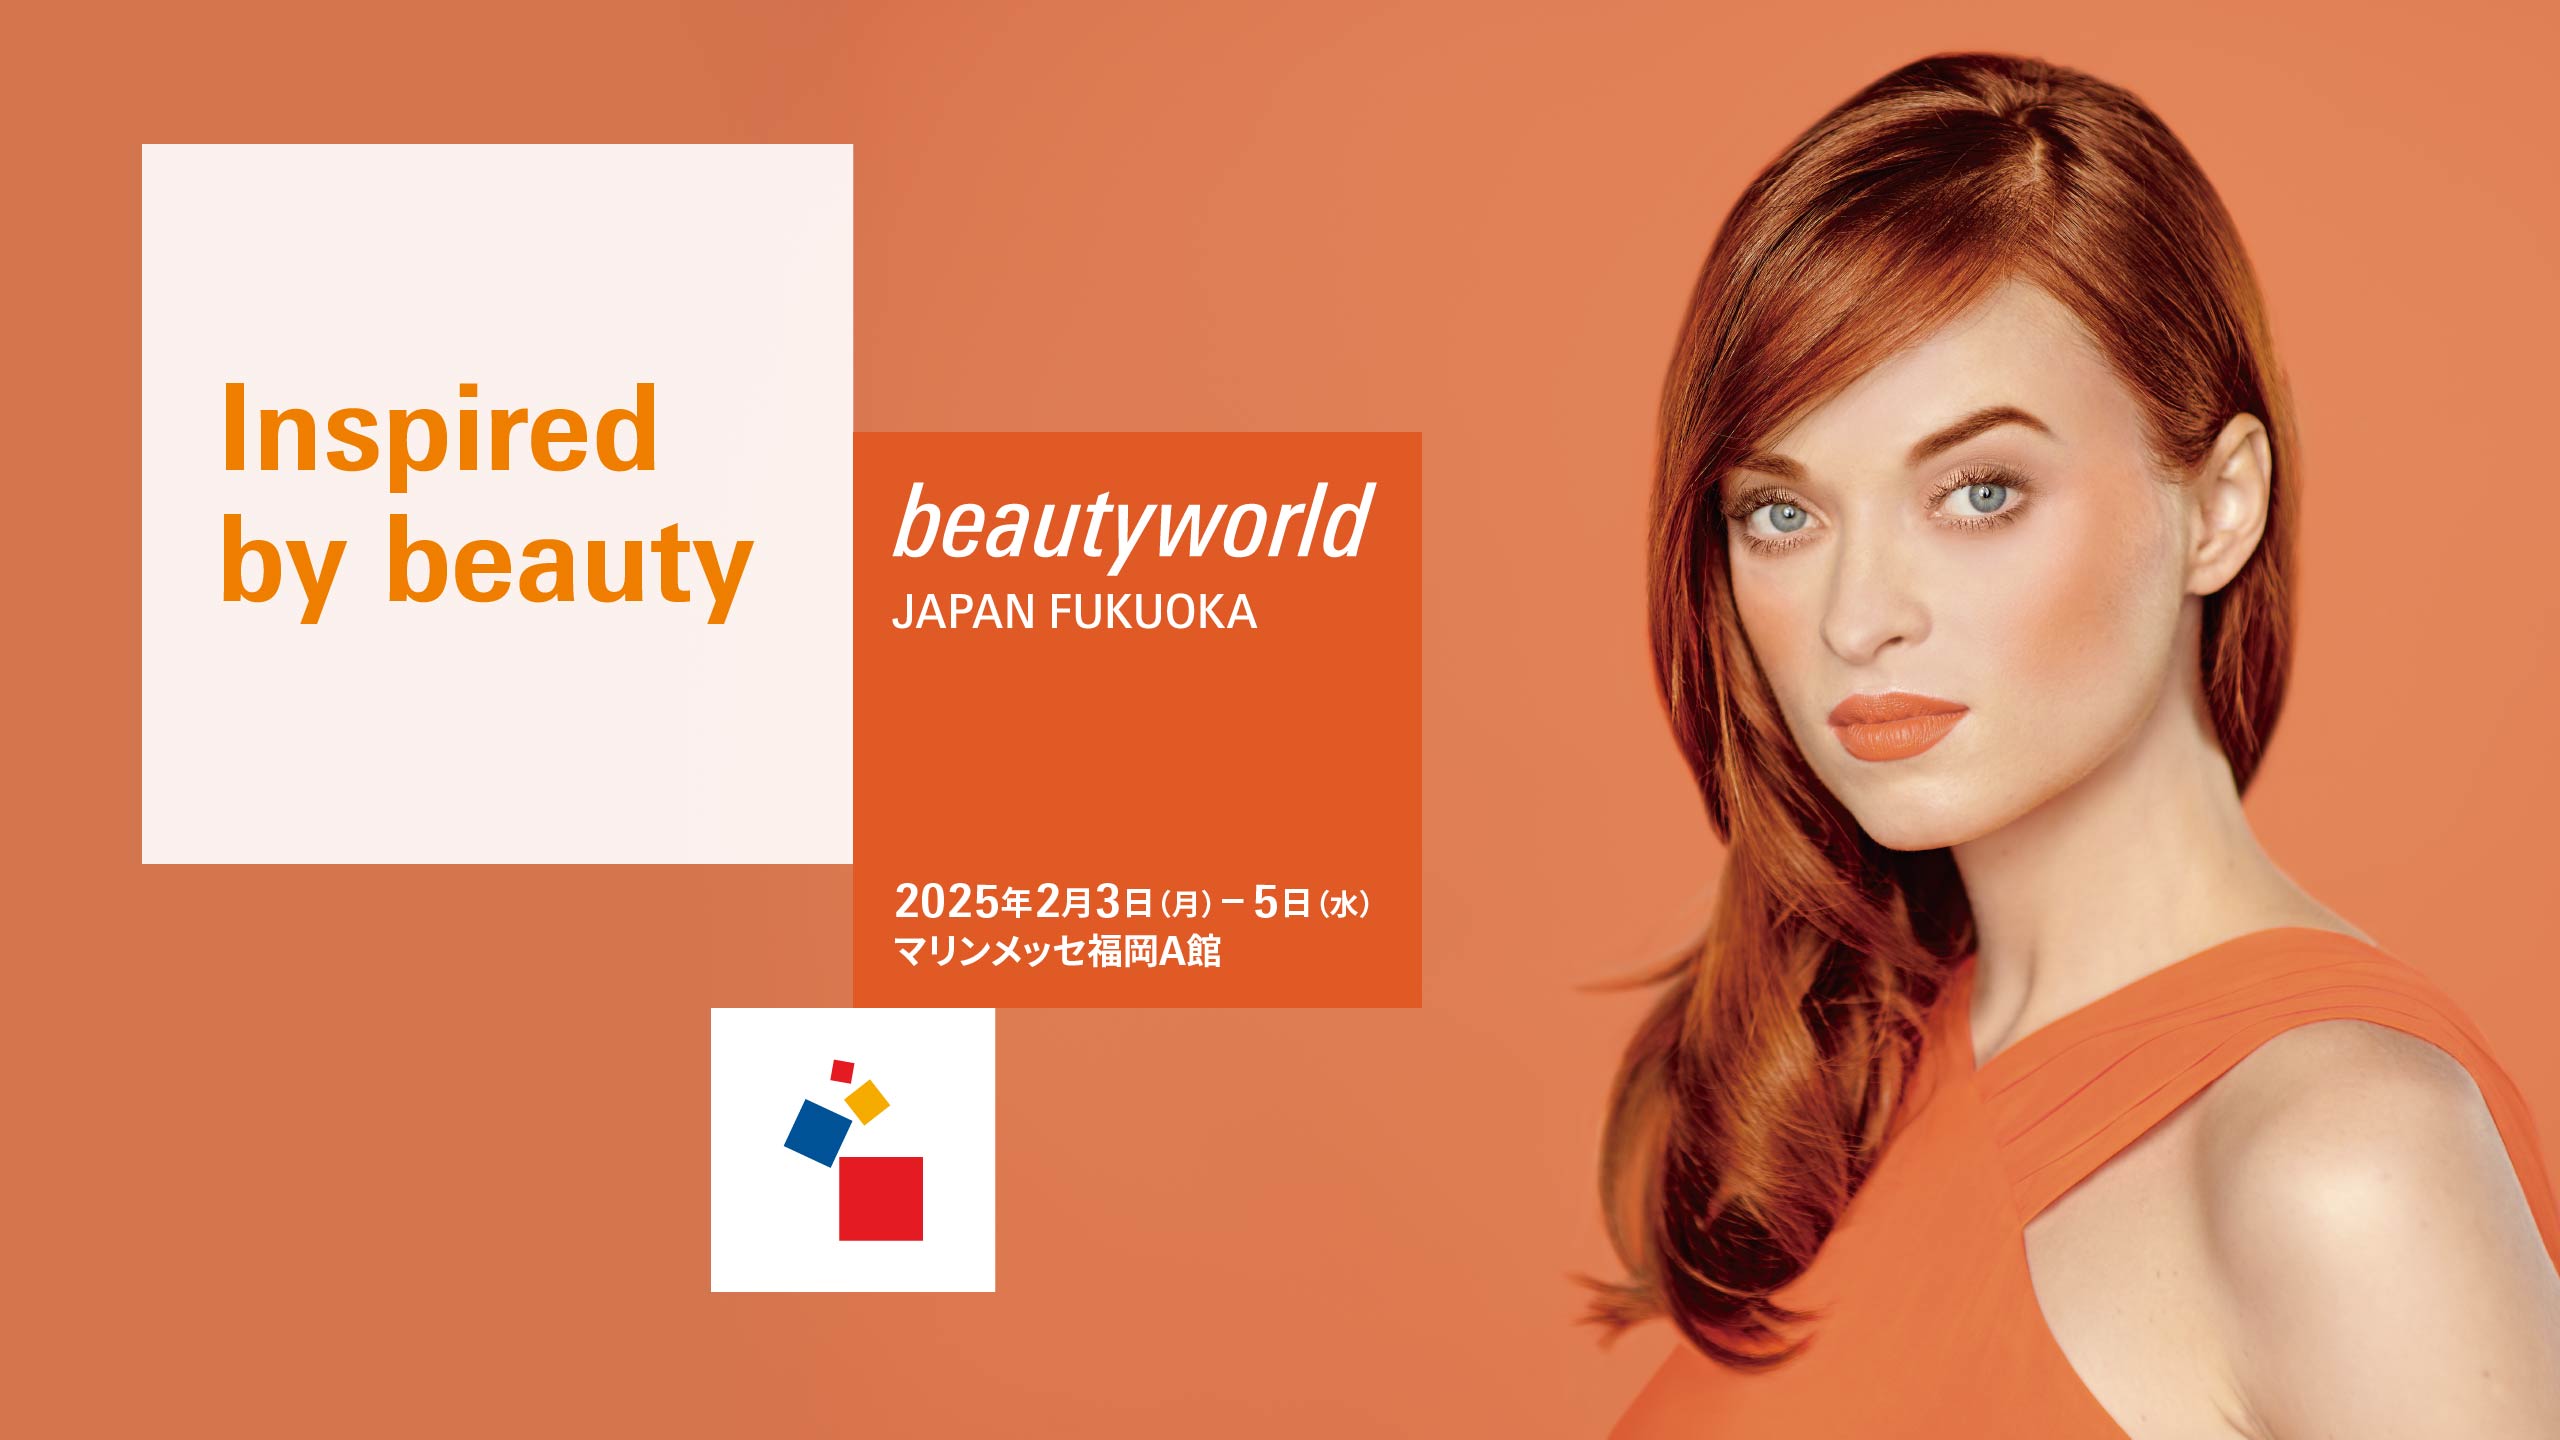 Beautyworld Japan Fukuoka